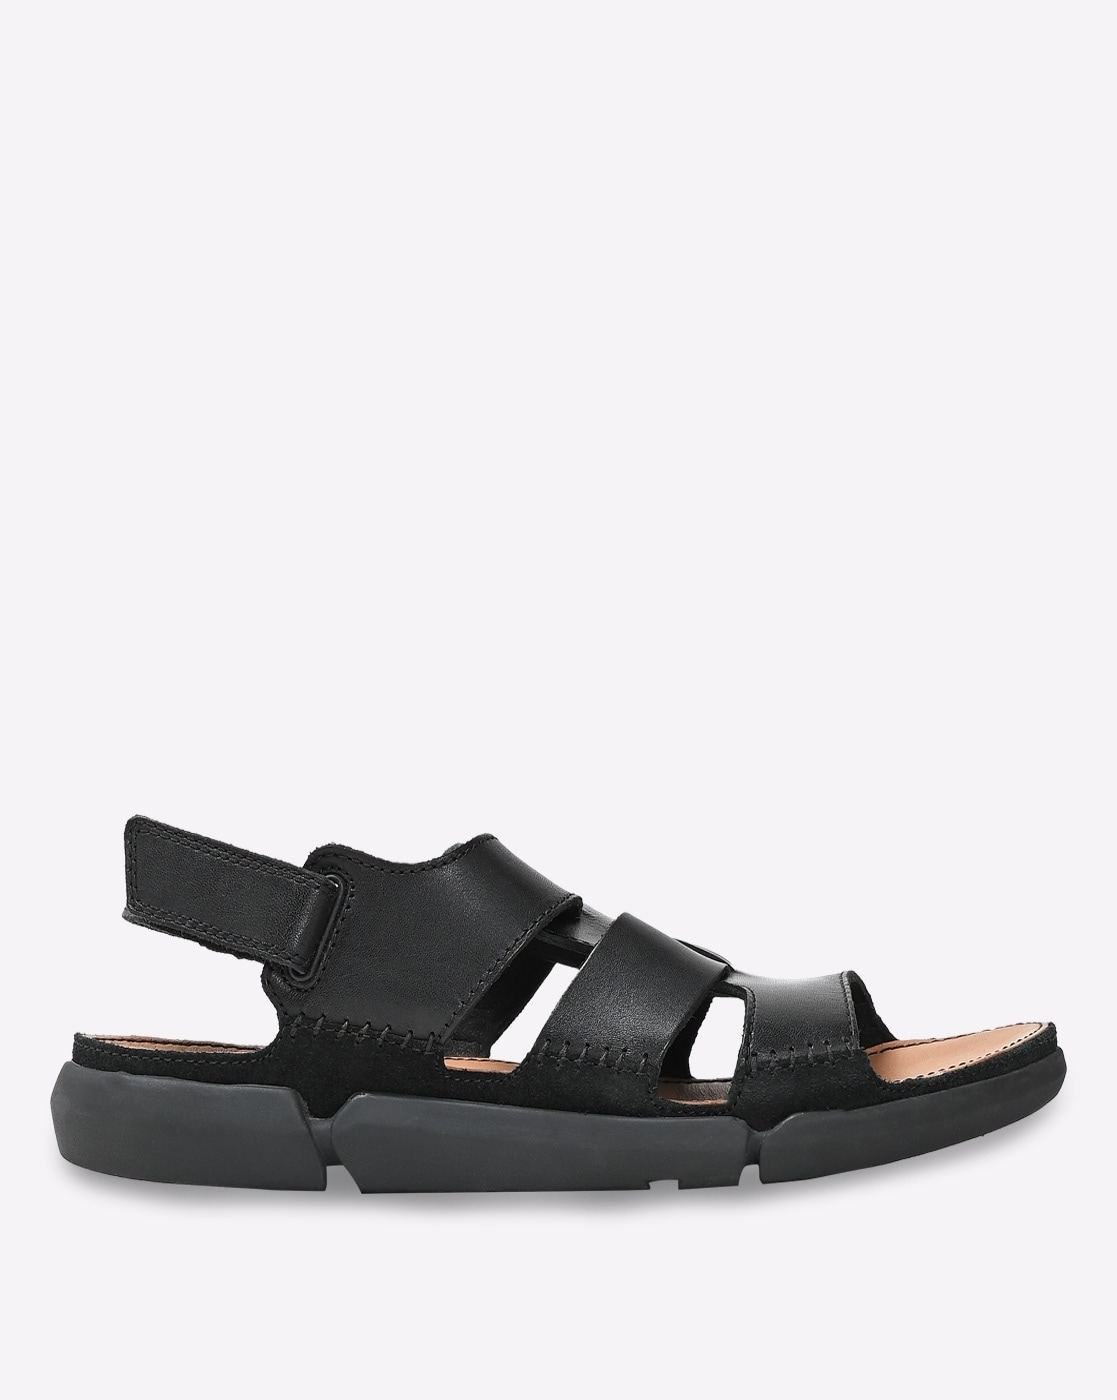 Clarks Sandals and flip-flops for Men | Online Sale up to 66% off | Lyst